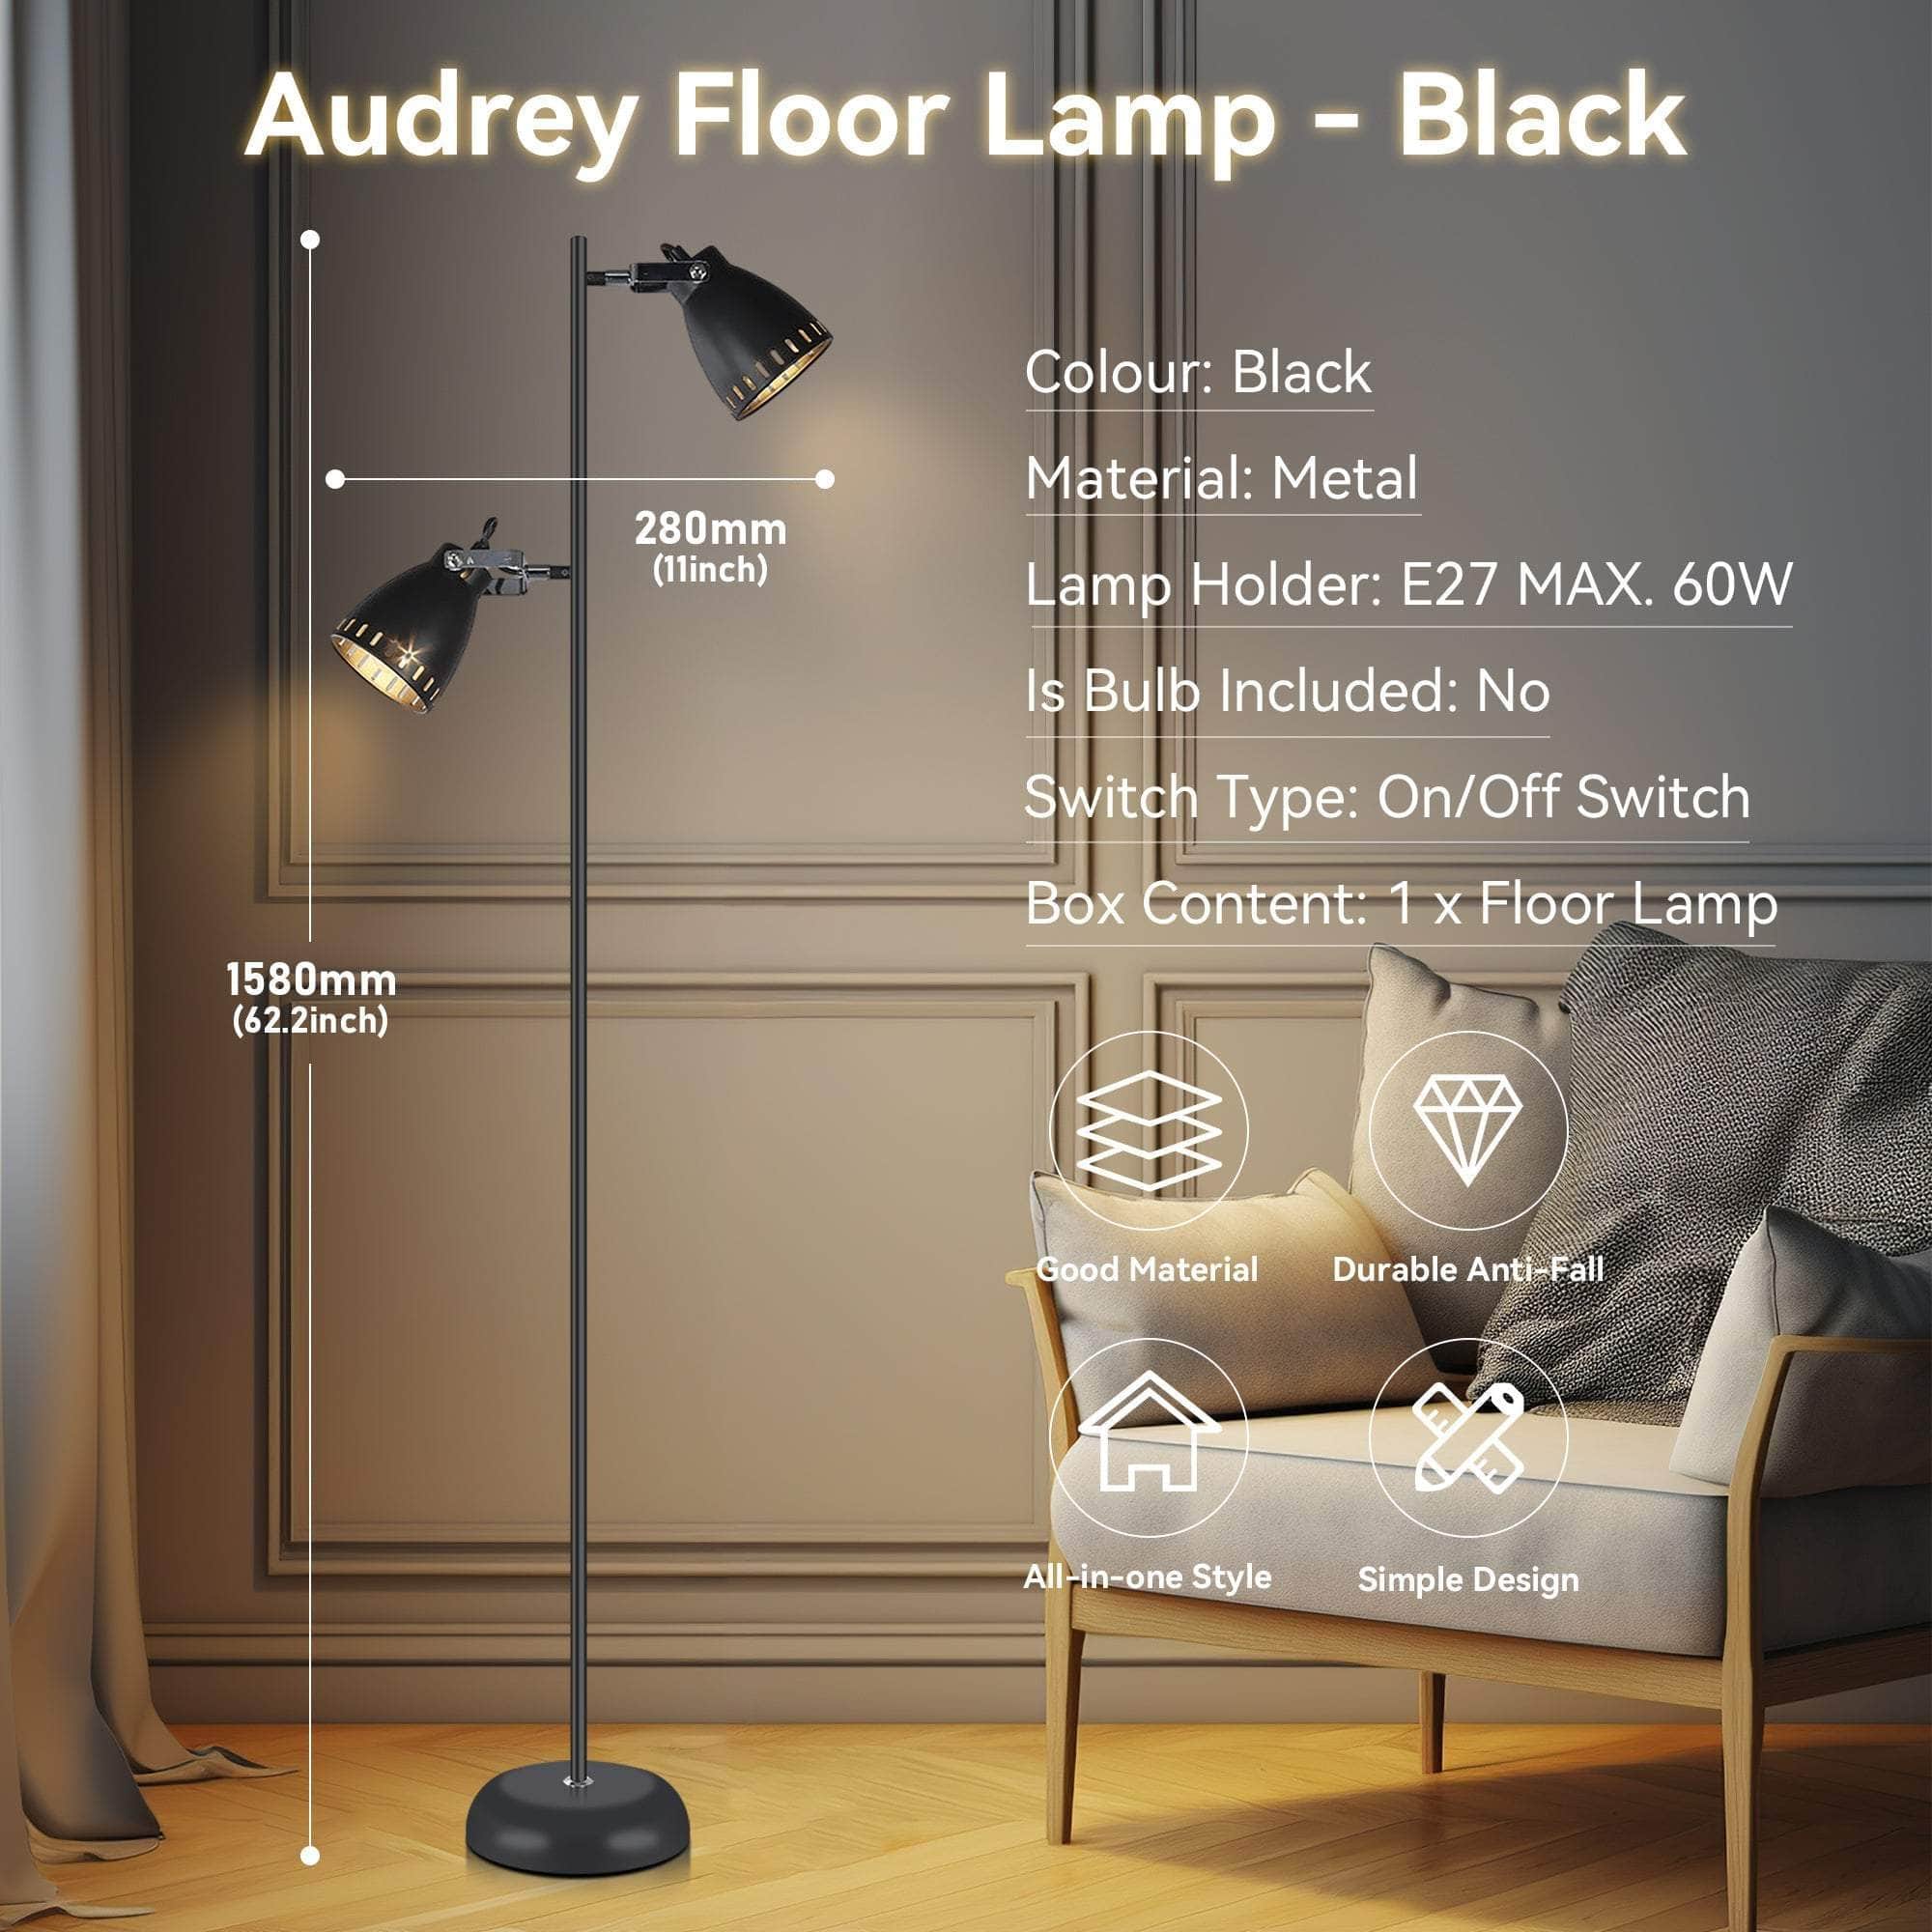 Audrey Floor Lamp - Black